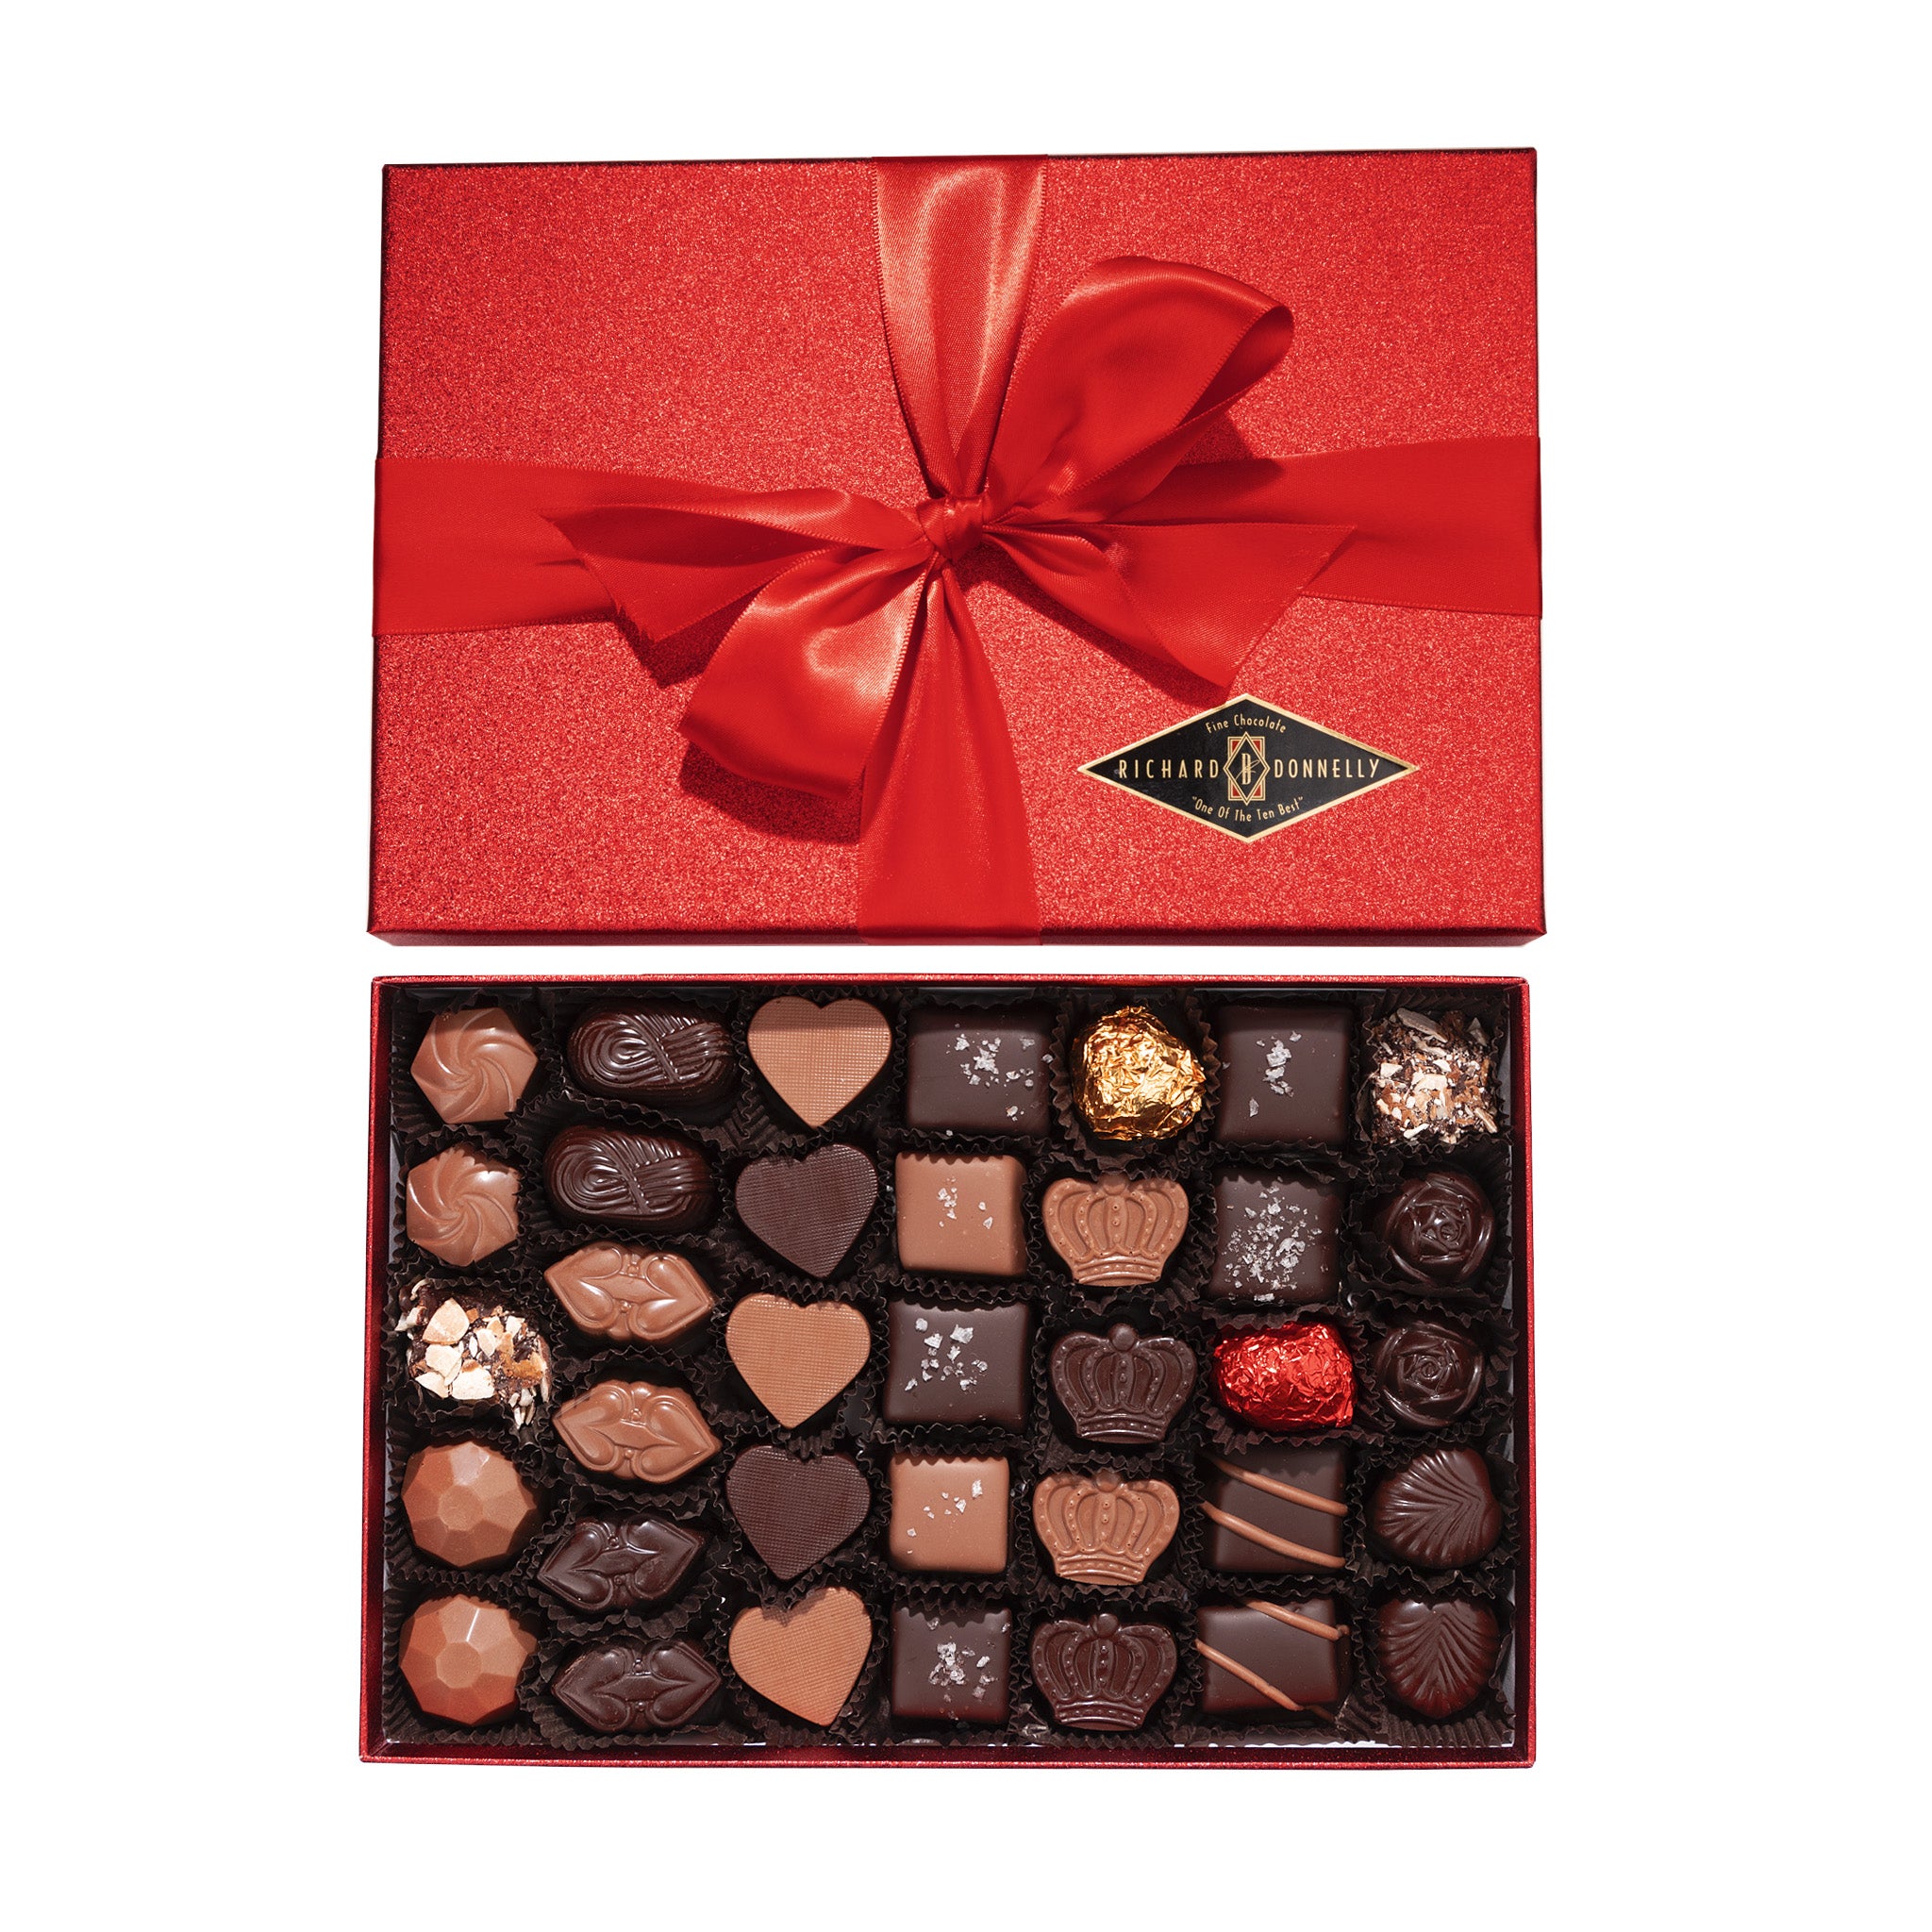 BELGIAN CHOCOLATES 26-28 chocolates White Gift Box 500g | eBay